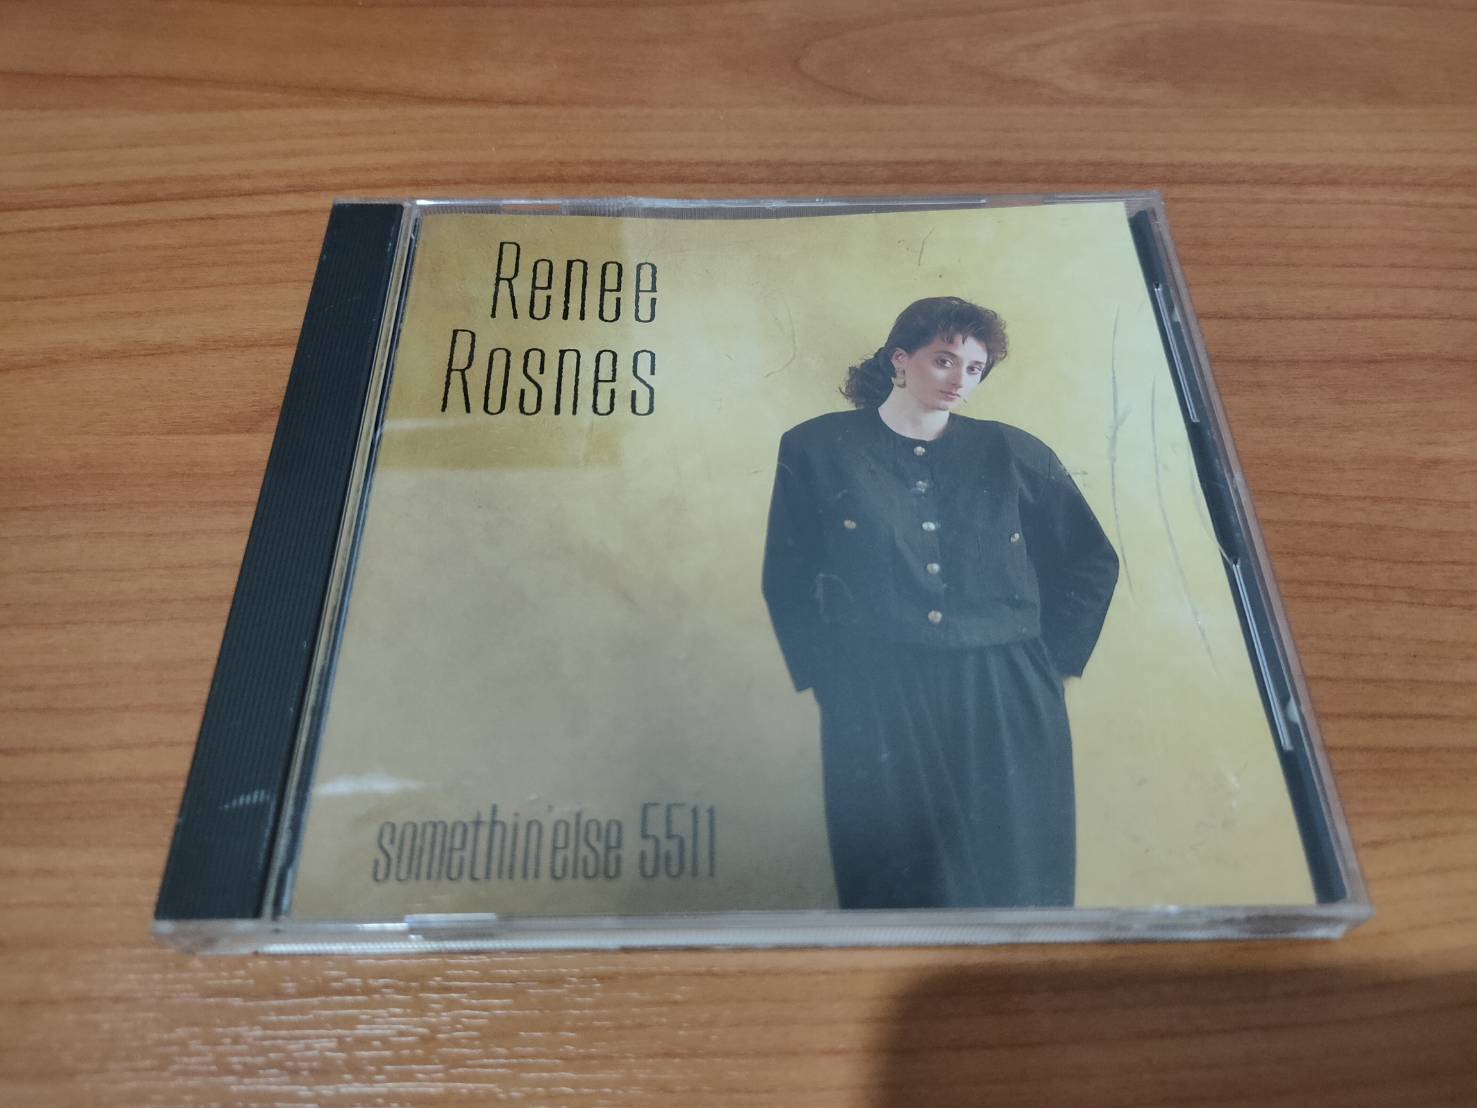 CD.MUSIC ซีดีเพลง เพลงสากล  Renee Rosnes (***โปรดดูภาพสินค้าอย่างละเอียดก่อนทำการสั่งซื้อ*** )